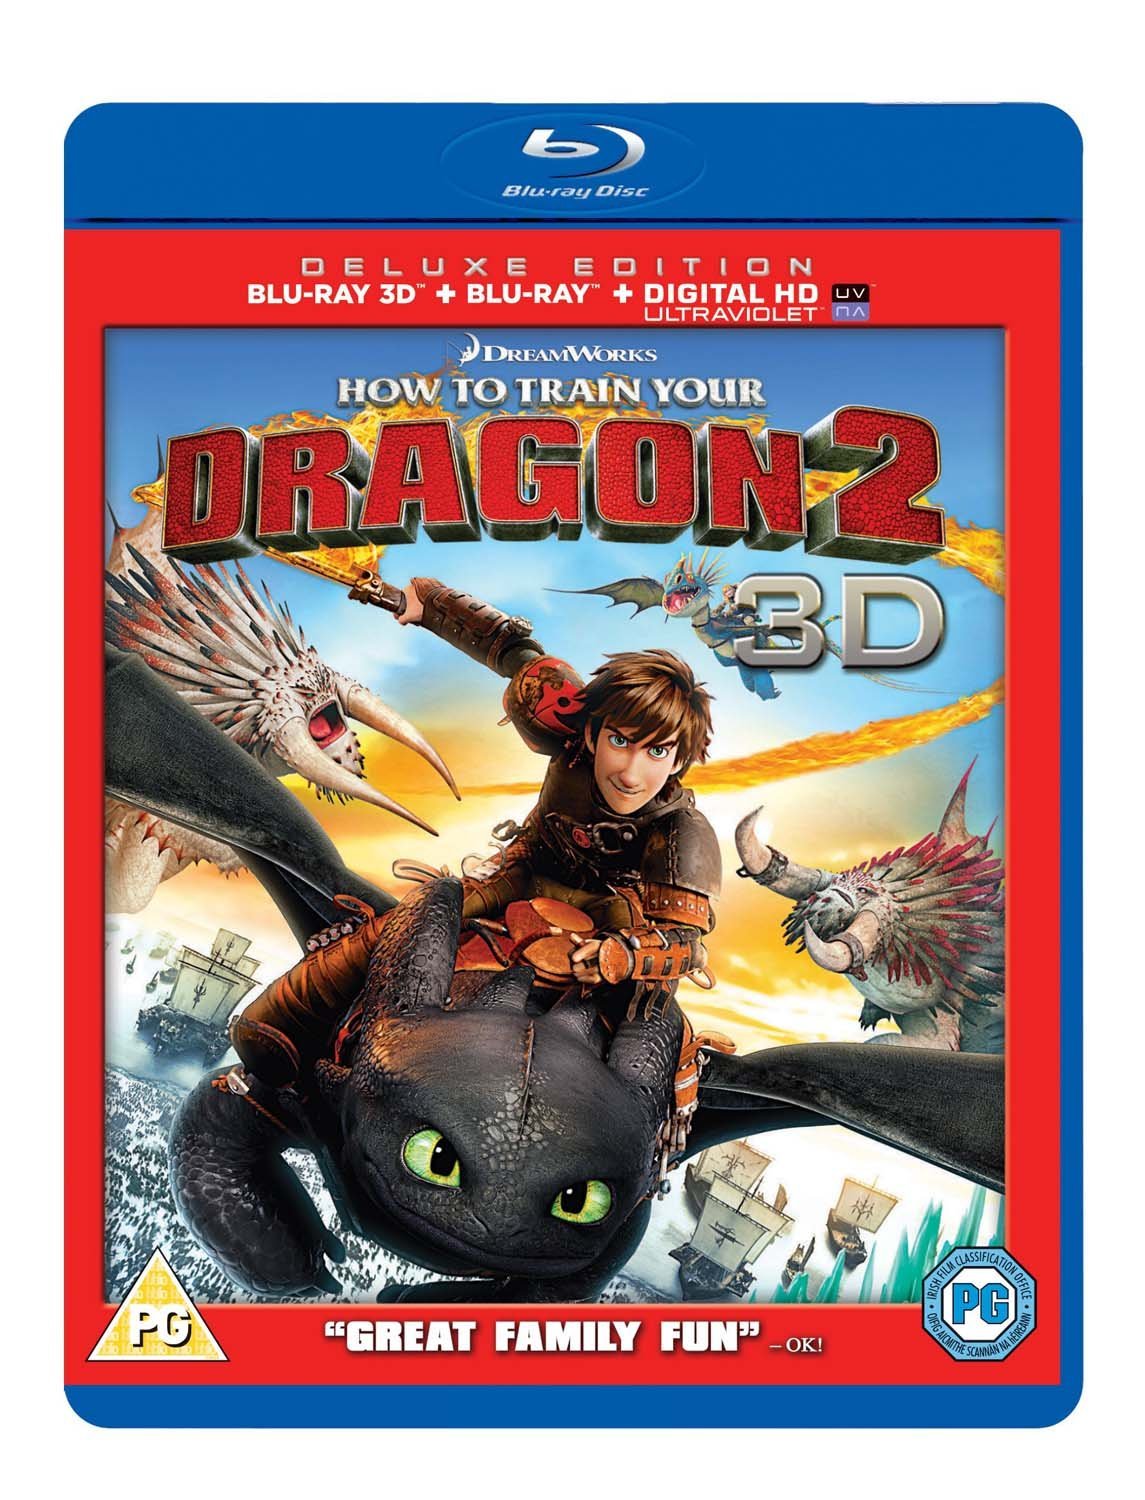 How to Train Your Dragon 2 (Blu-ray 3D + Blu-ray + UV Copy)